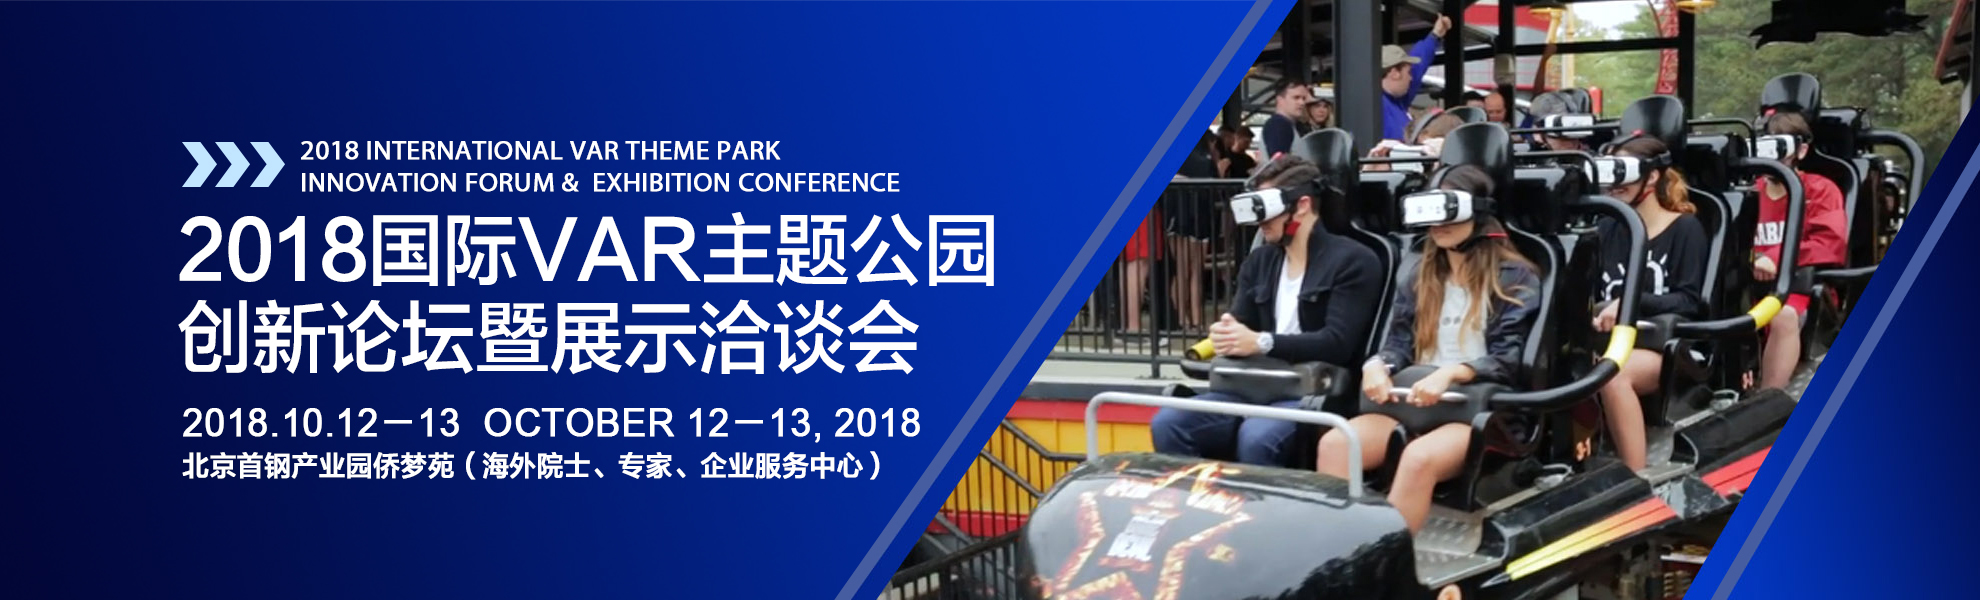 2018VRSD中韩国际VAR主题公园大会 10月在京盛大开幕